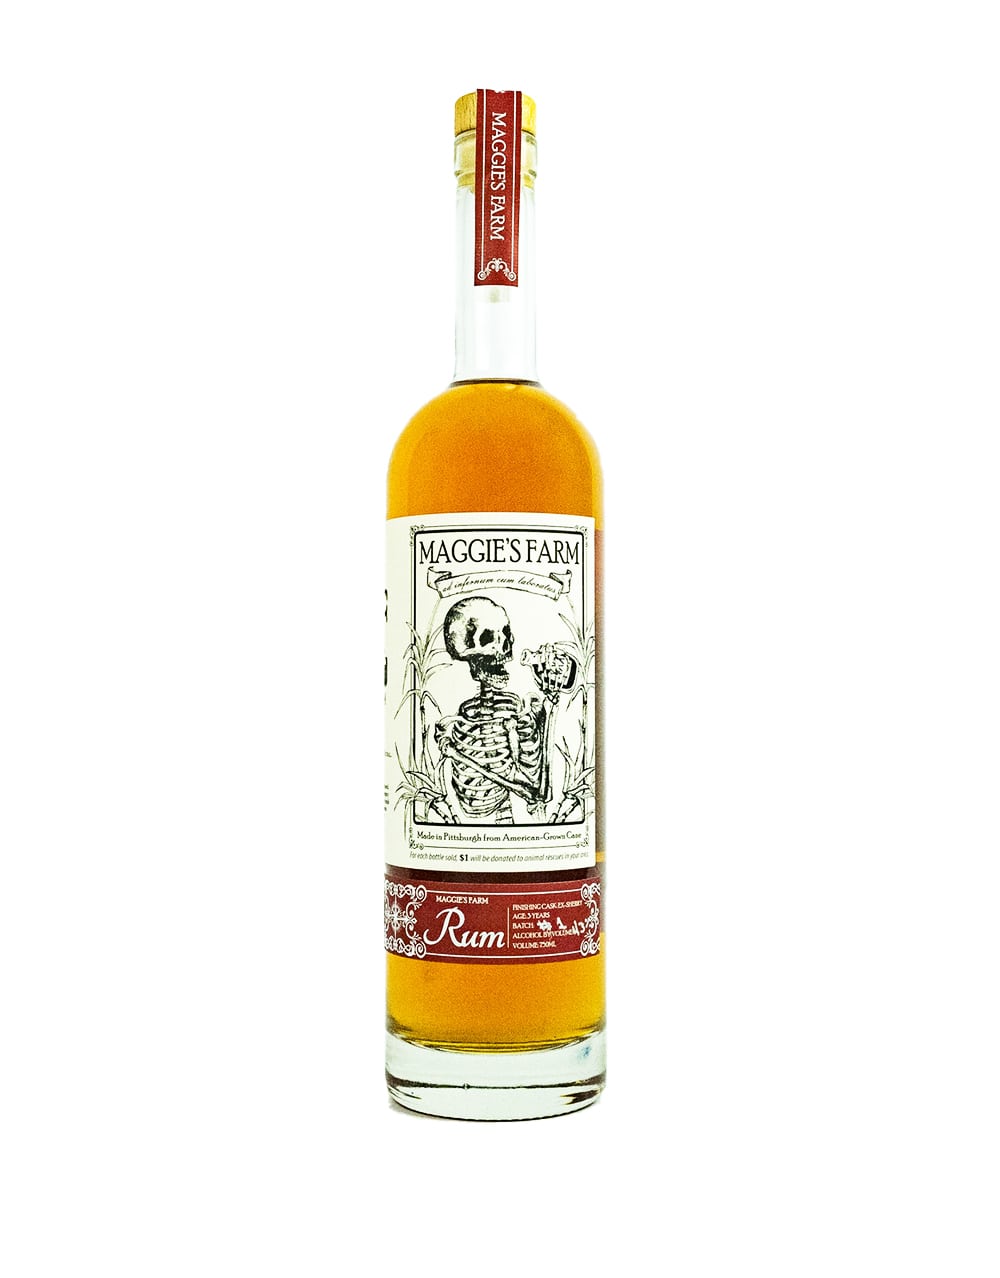 Royal Batch Edition Limitada | 30 Ron Year Centenario Rum